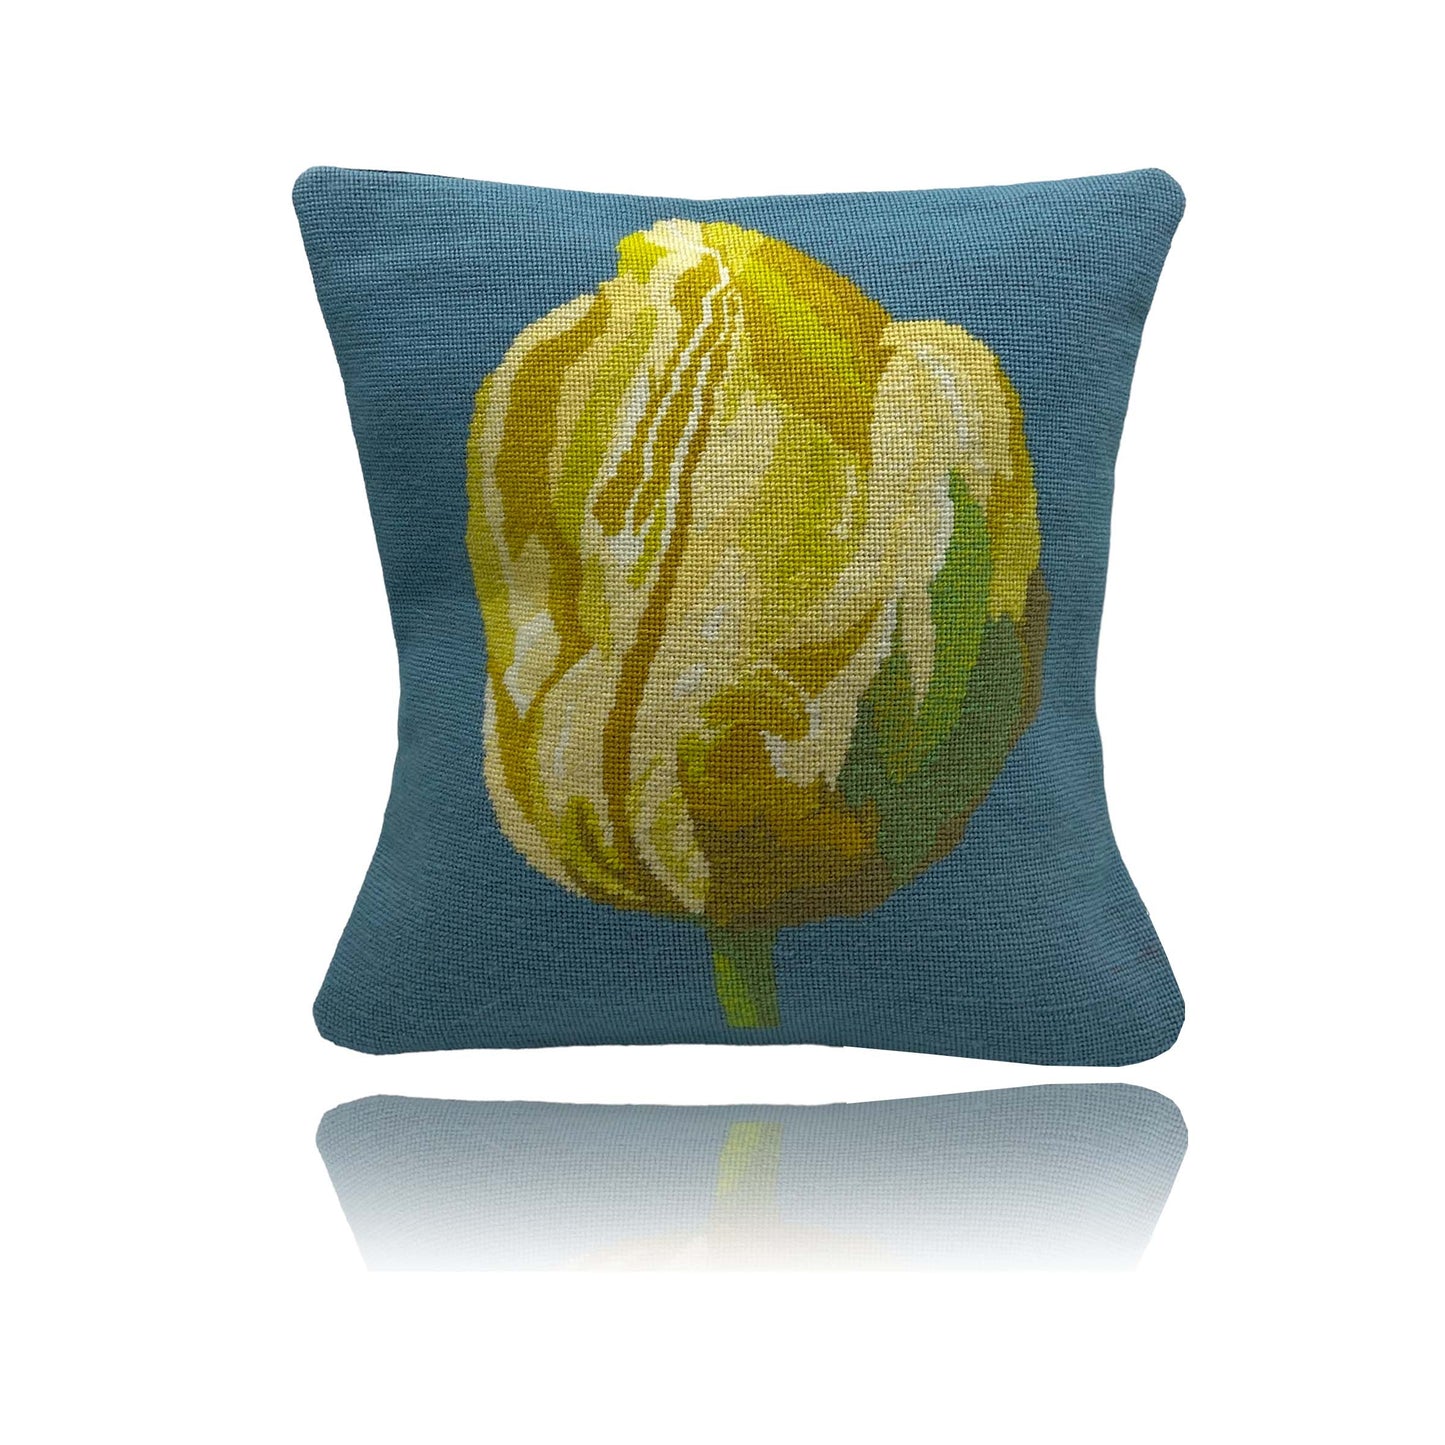 Limited Edition Yellow Tulip on Blue Background (finished cushion)